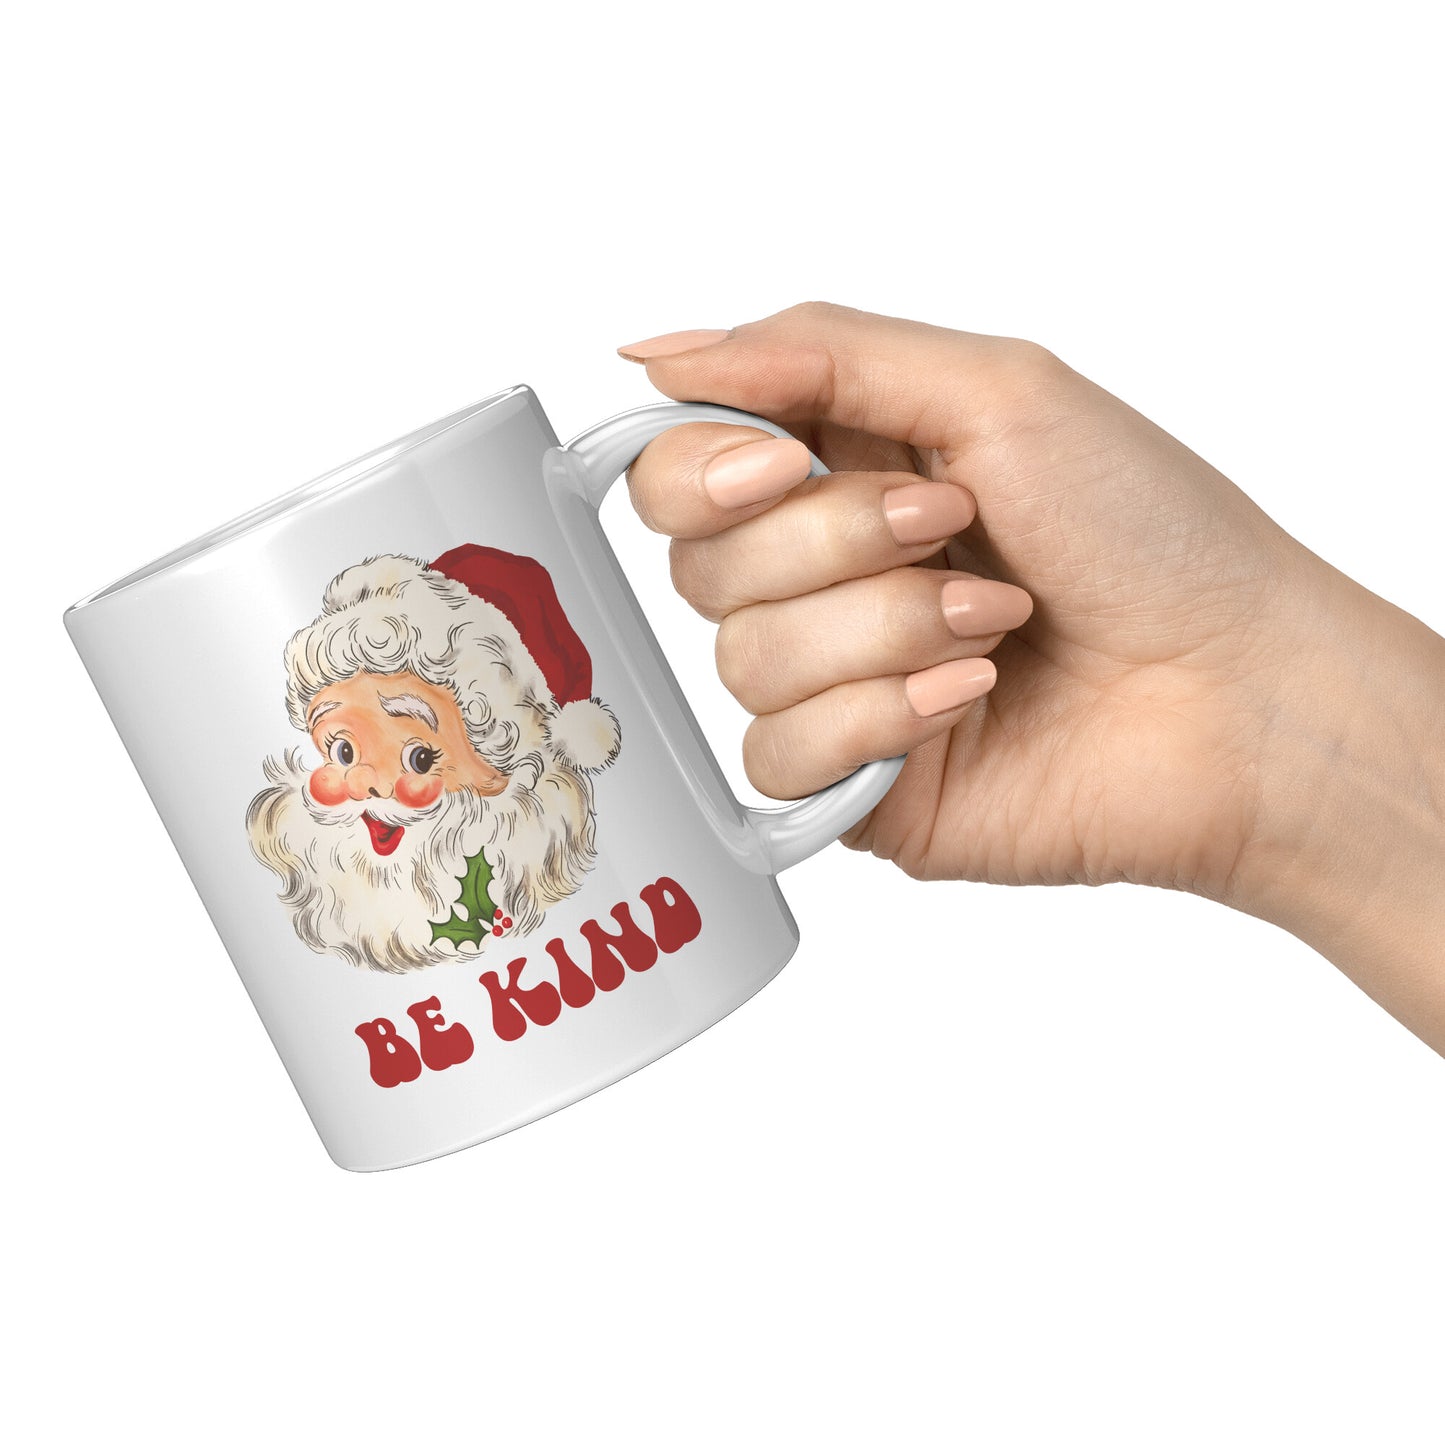 Be Kind Retro Santa Christmas Mug